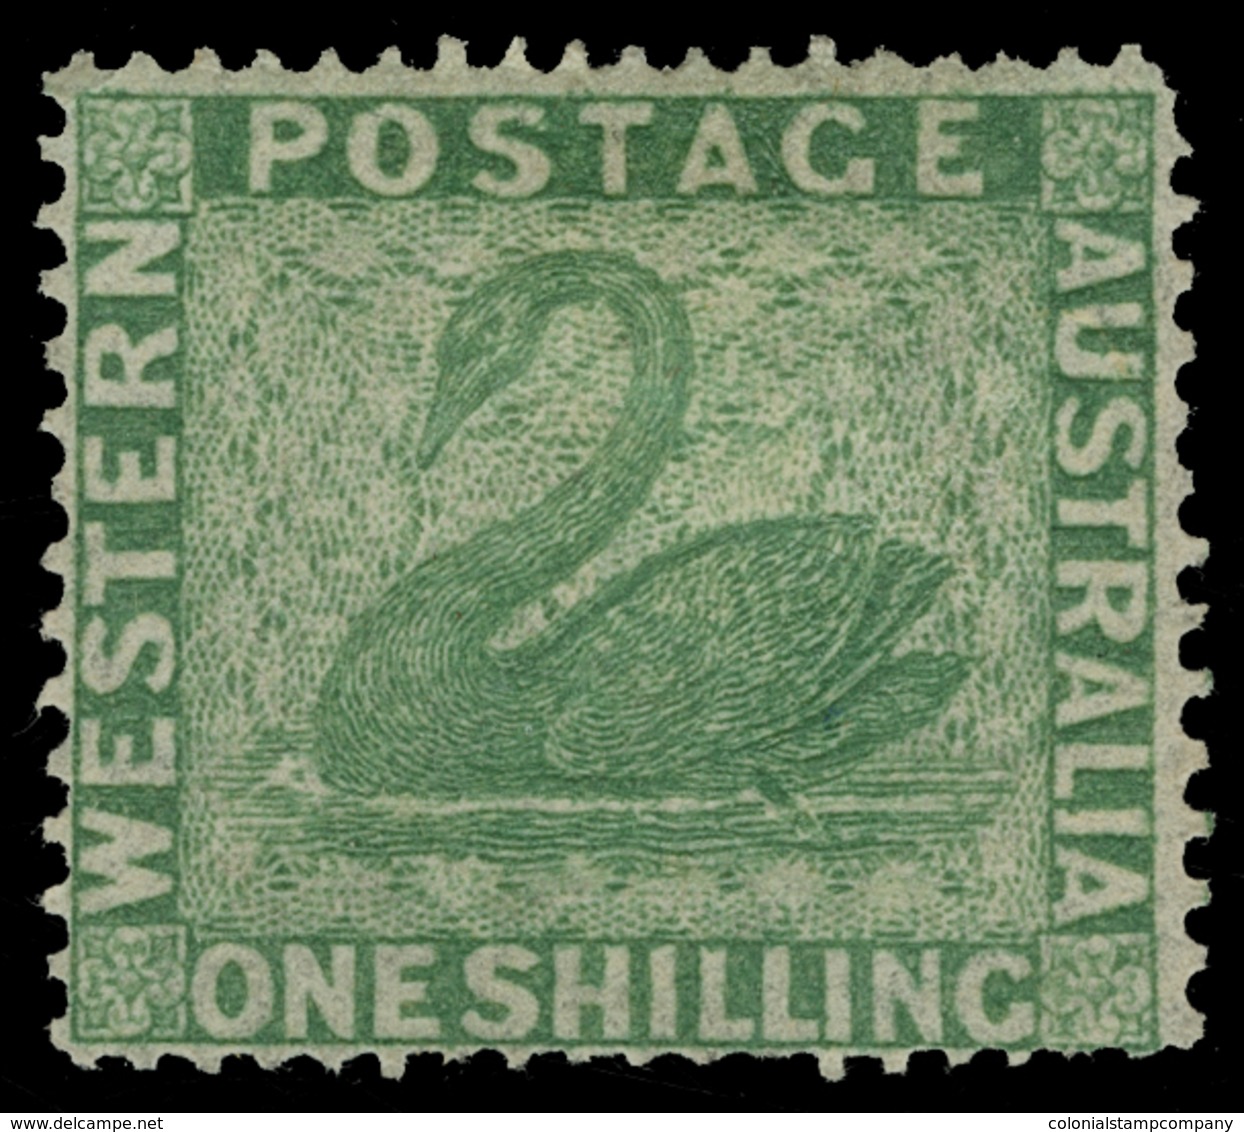 * Australia / Western Australia - Lot No.147 - Mint Stamps